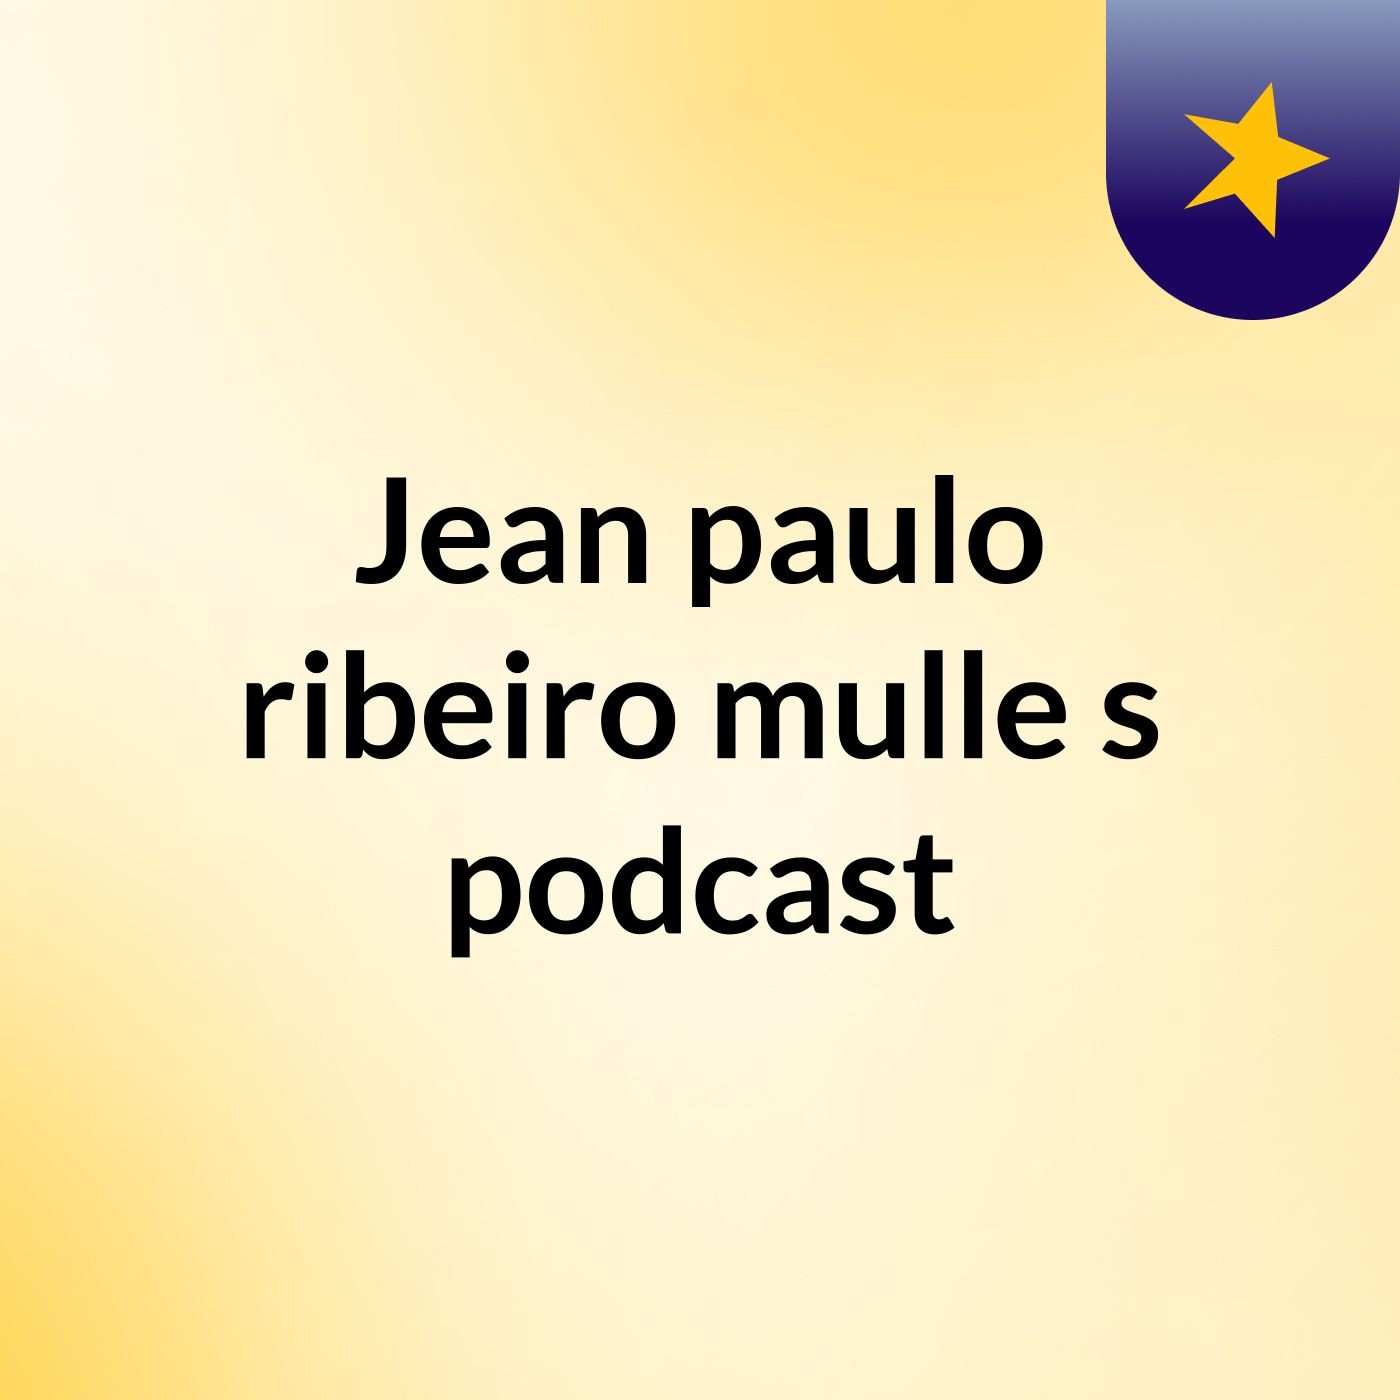 Jean paulo ribeiro mulle's podcast